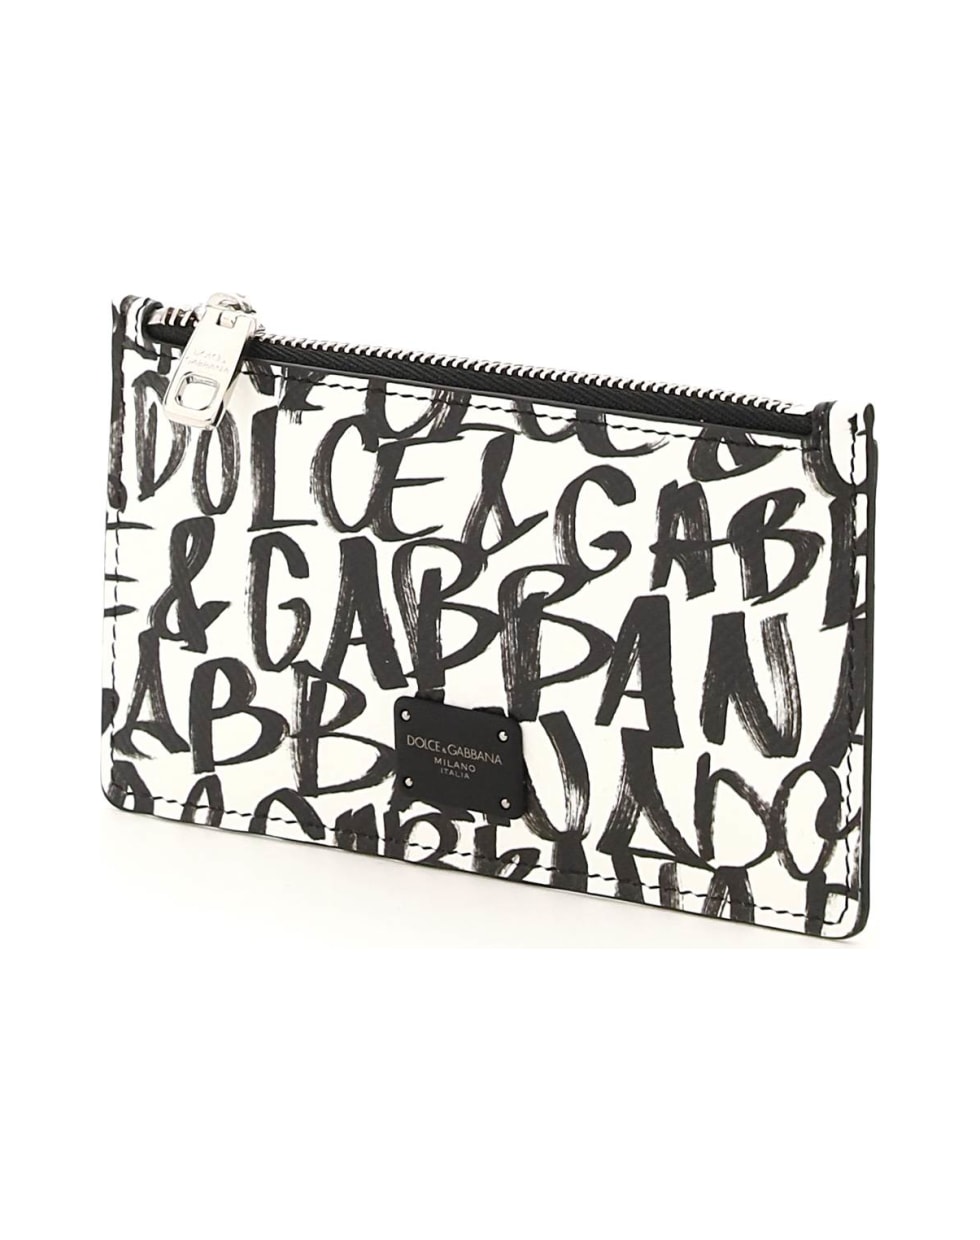 Dolce & Gabbana Dg Graffiti Zipped Card Holder - LOGO1 NERO F BCO NAT (Black)